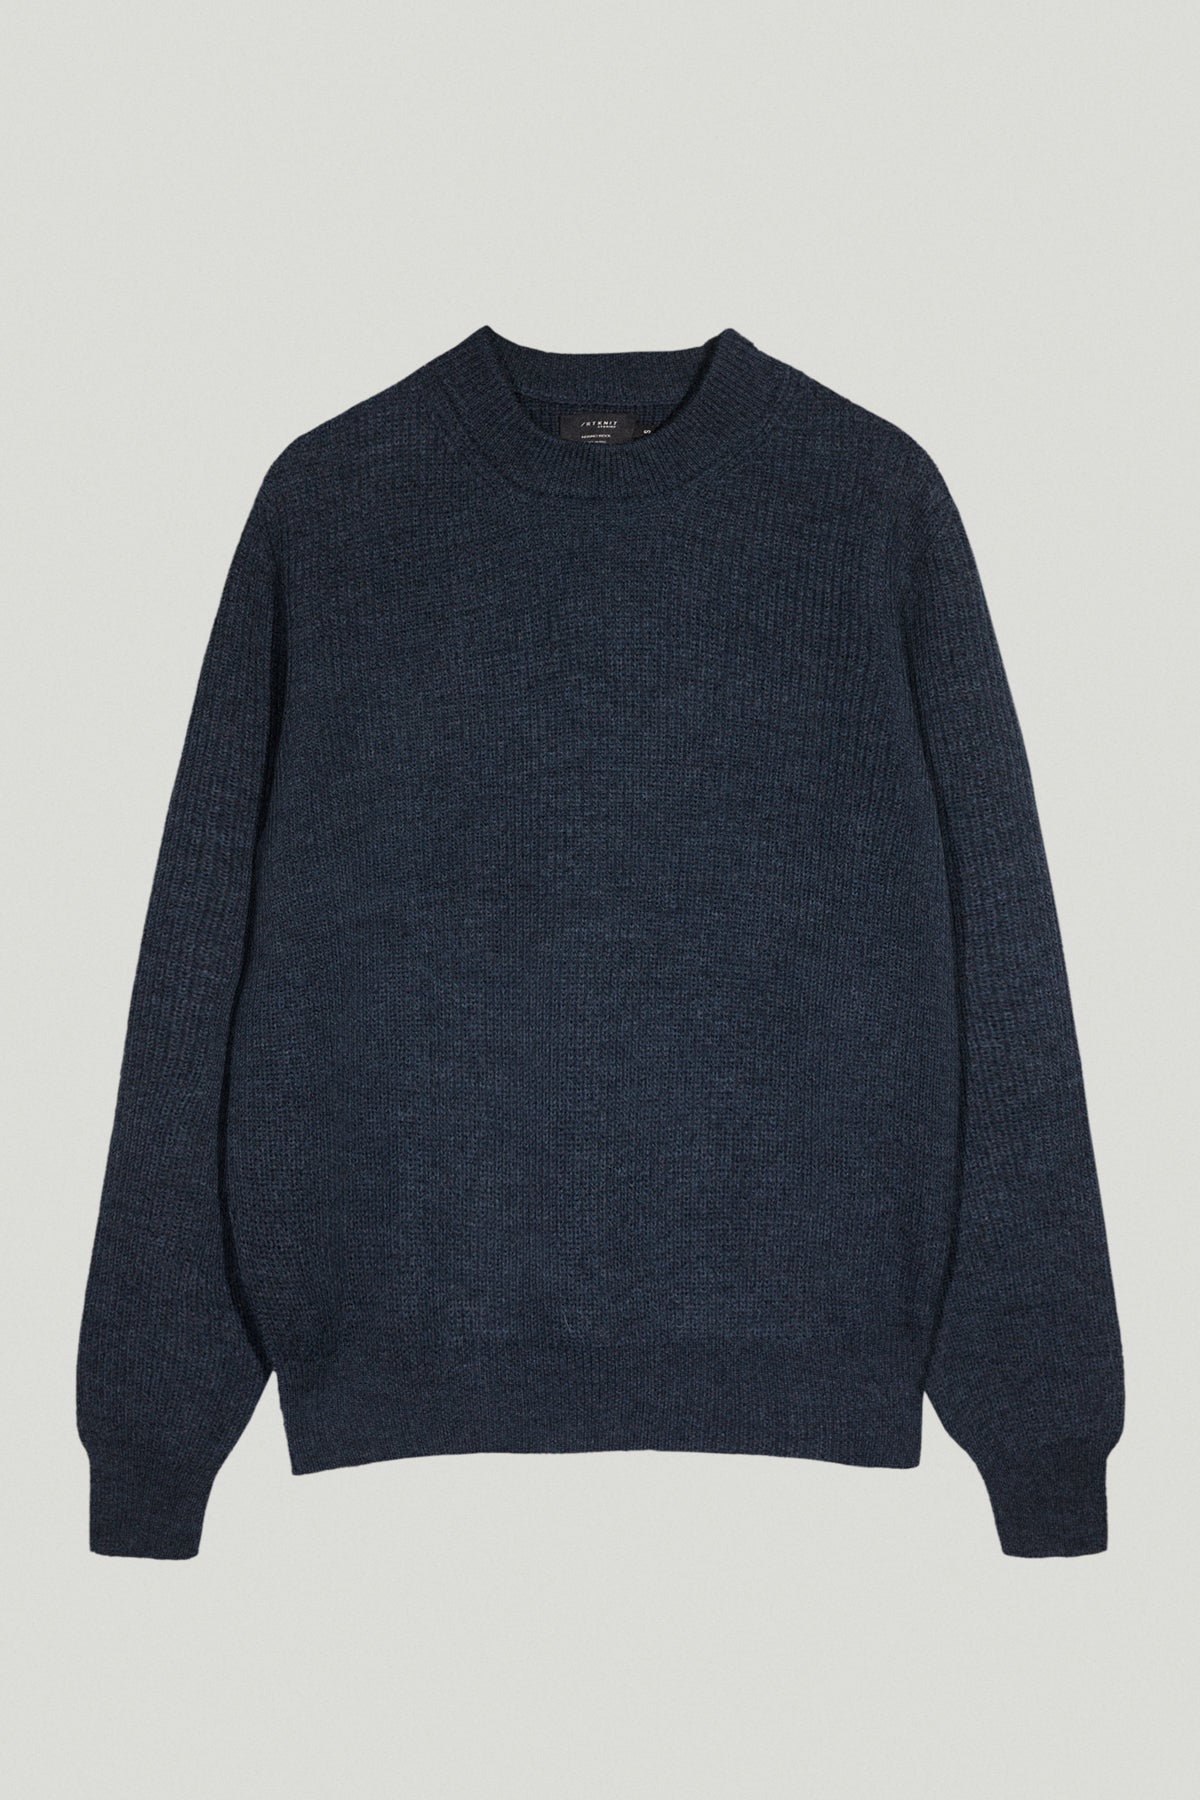 Indigo Blue | The Natural Dye Sweater